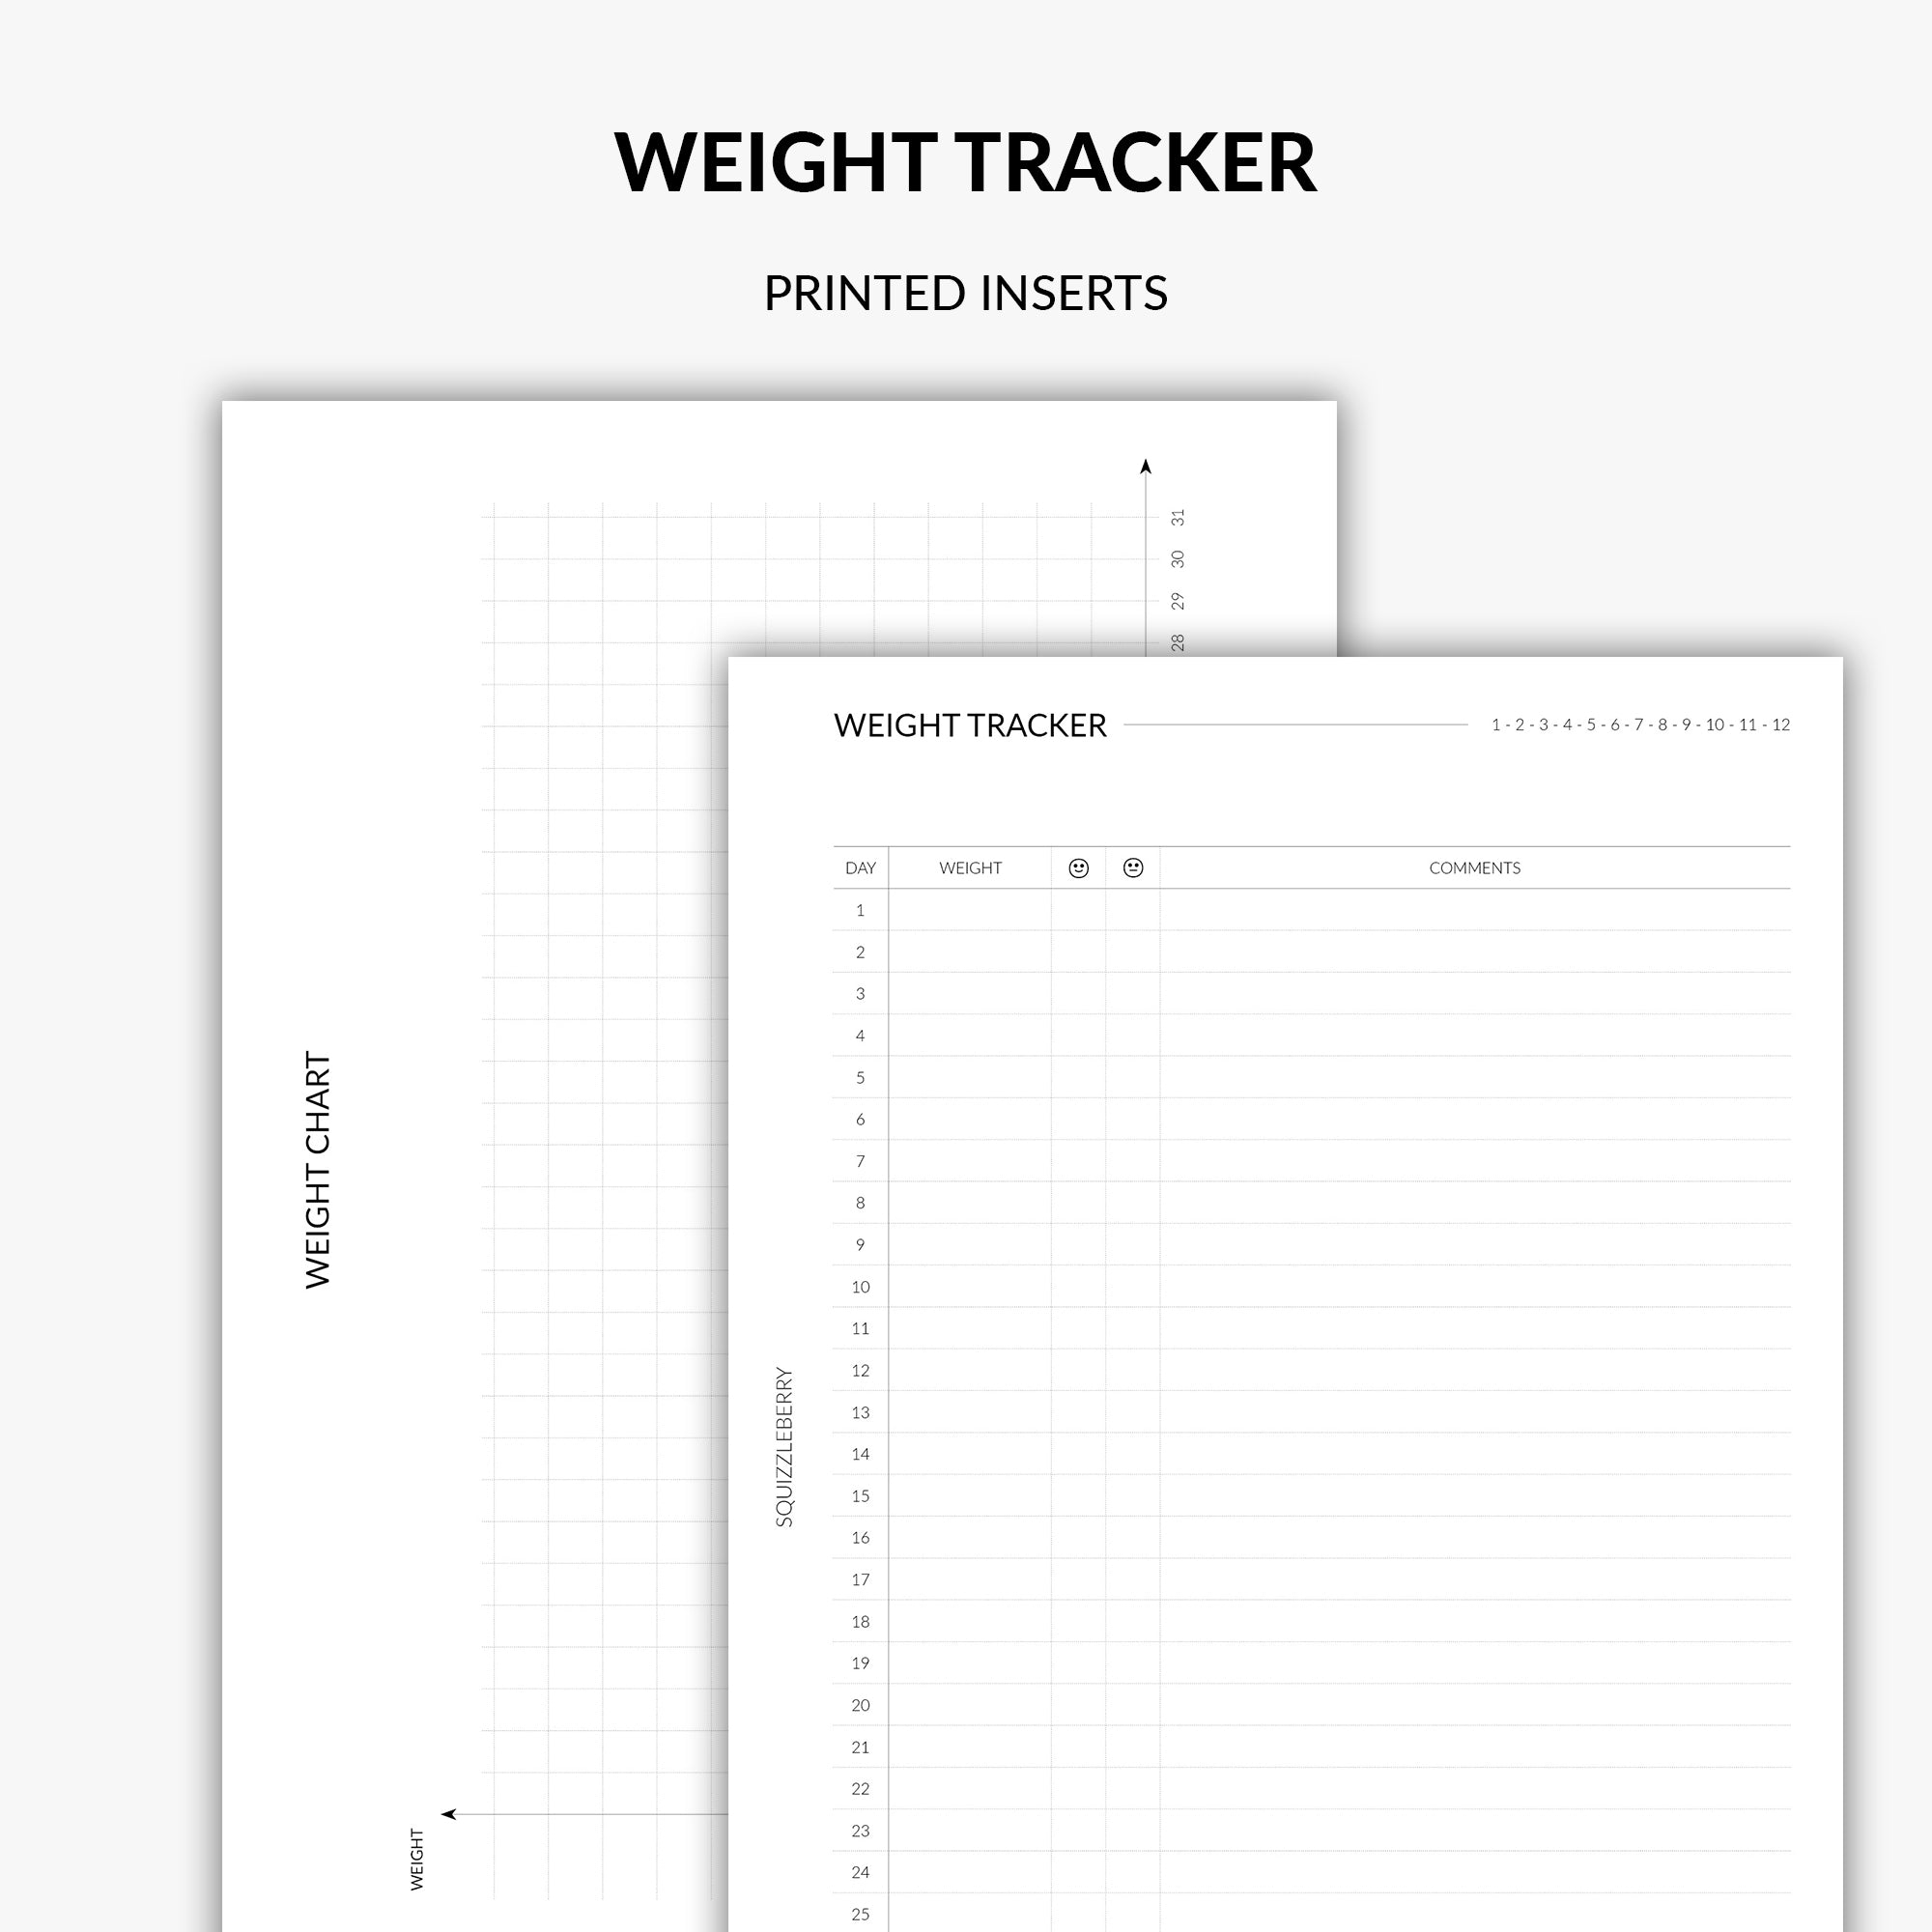 weight tracker printed inserts minimalist